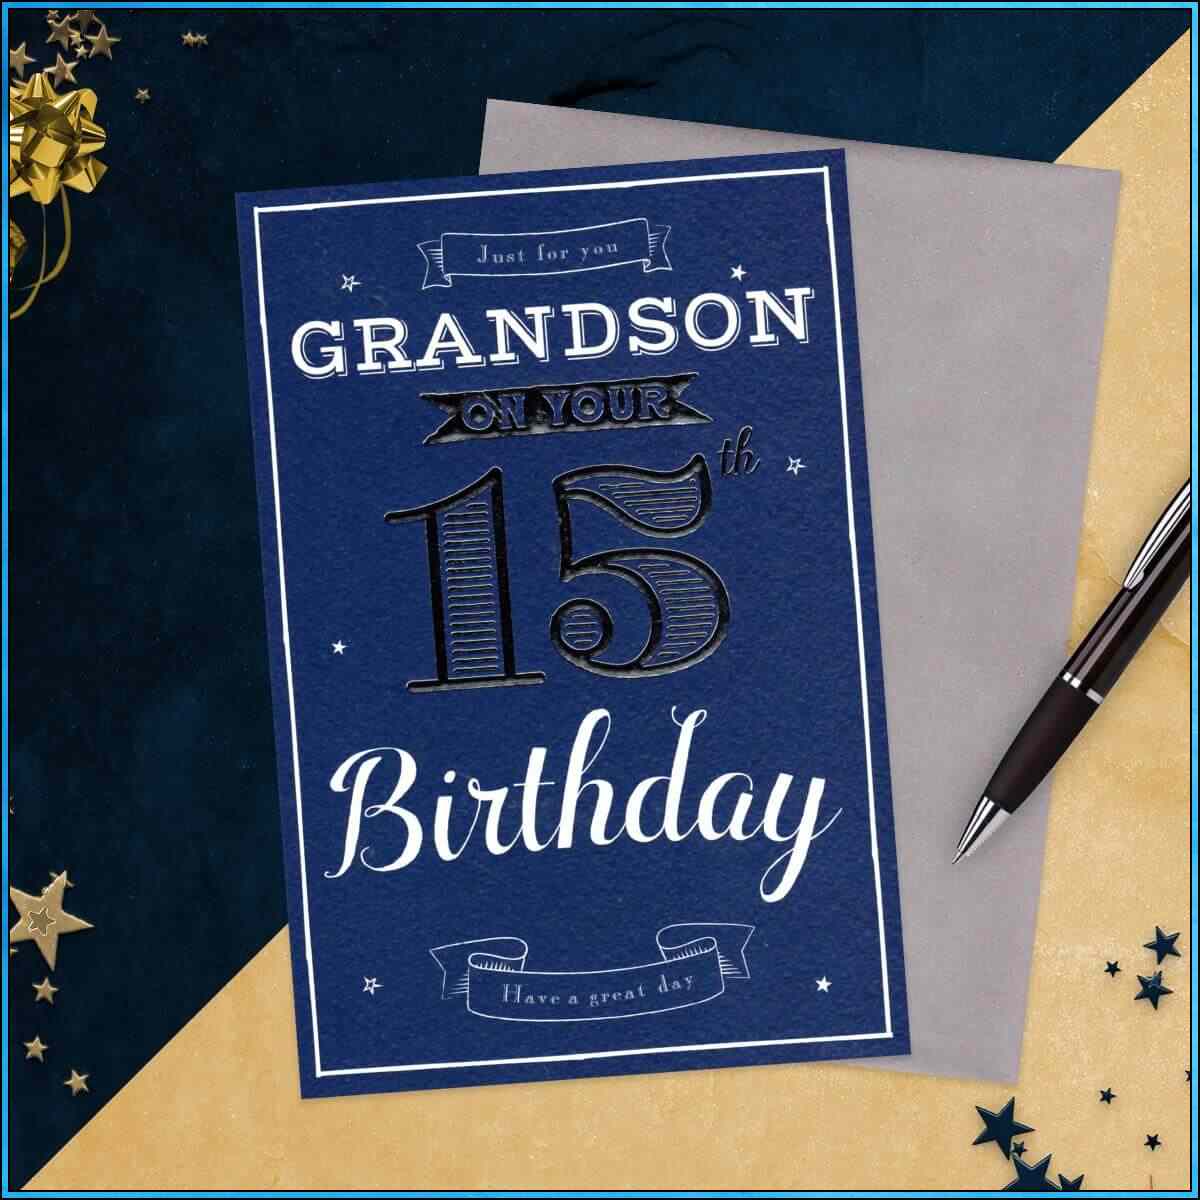 happy 15th birthday granddson images
